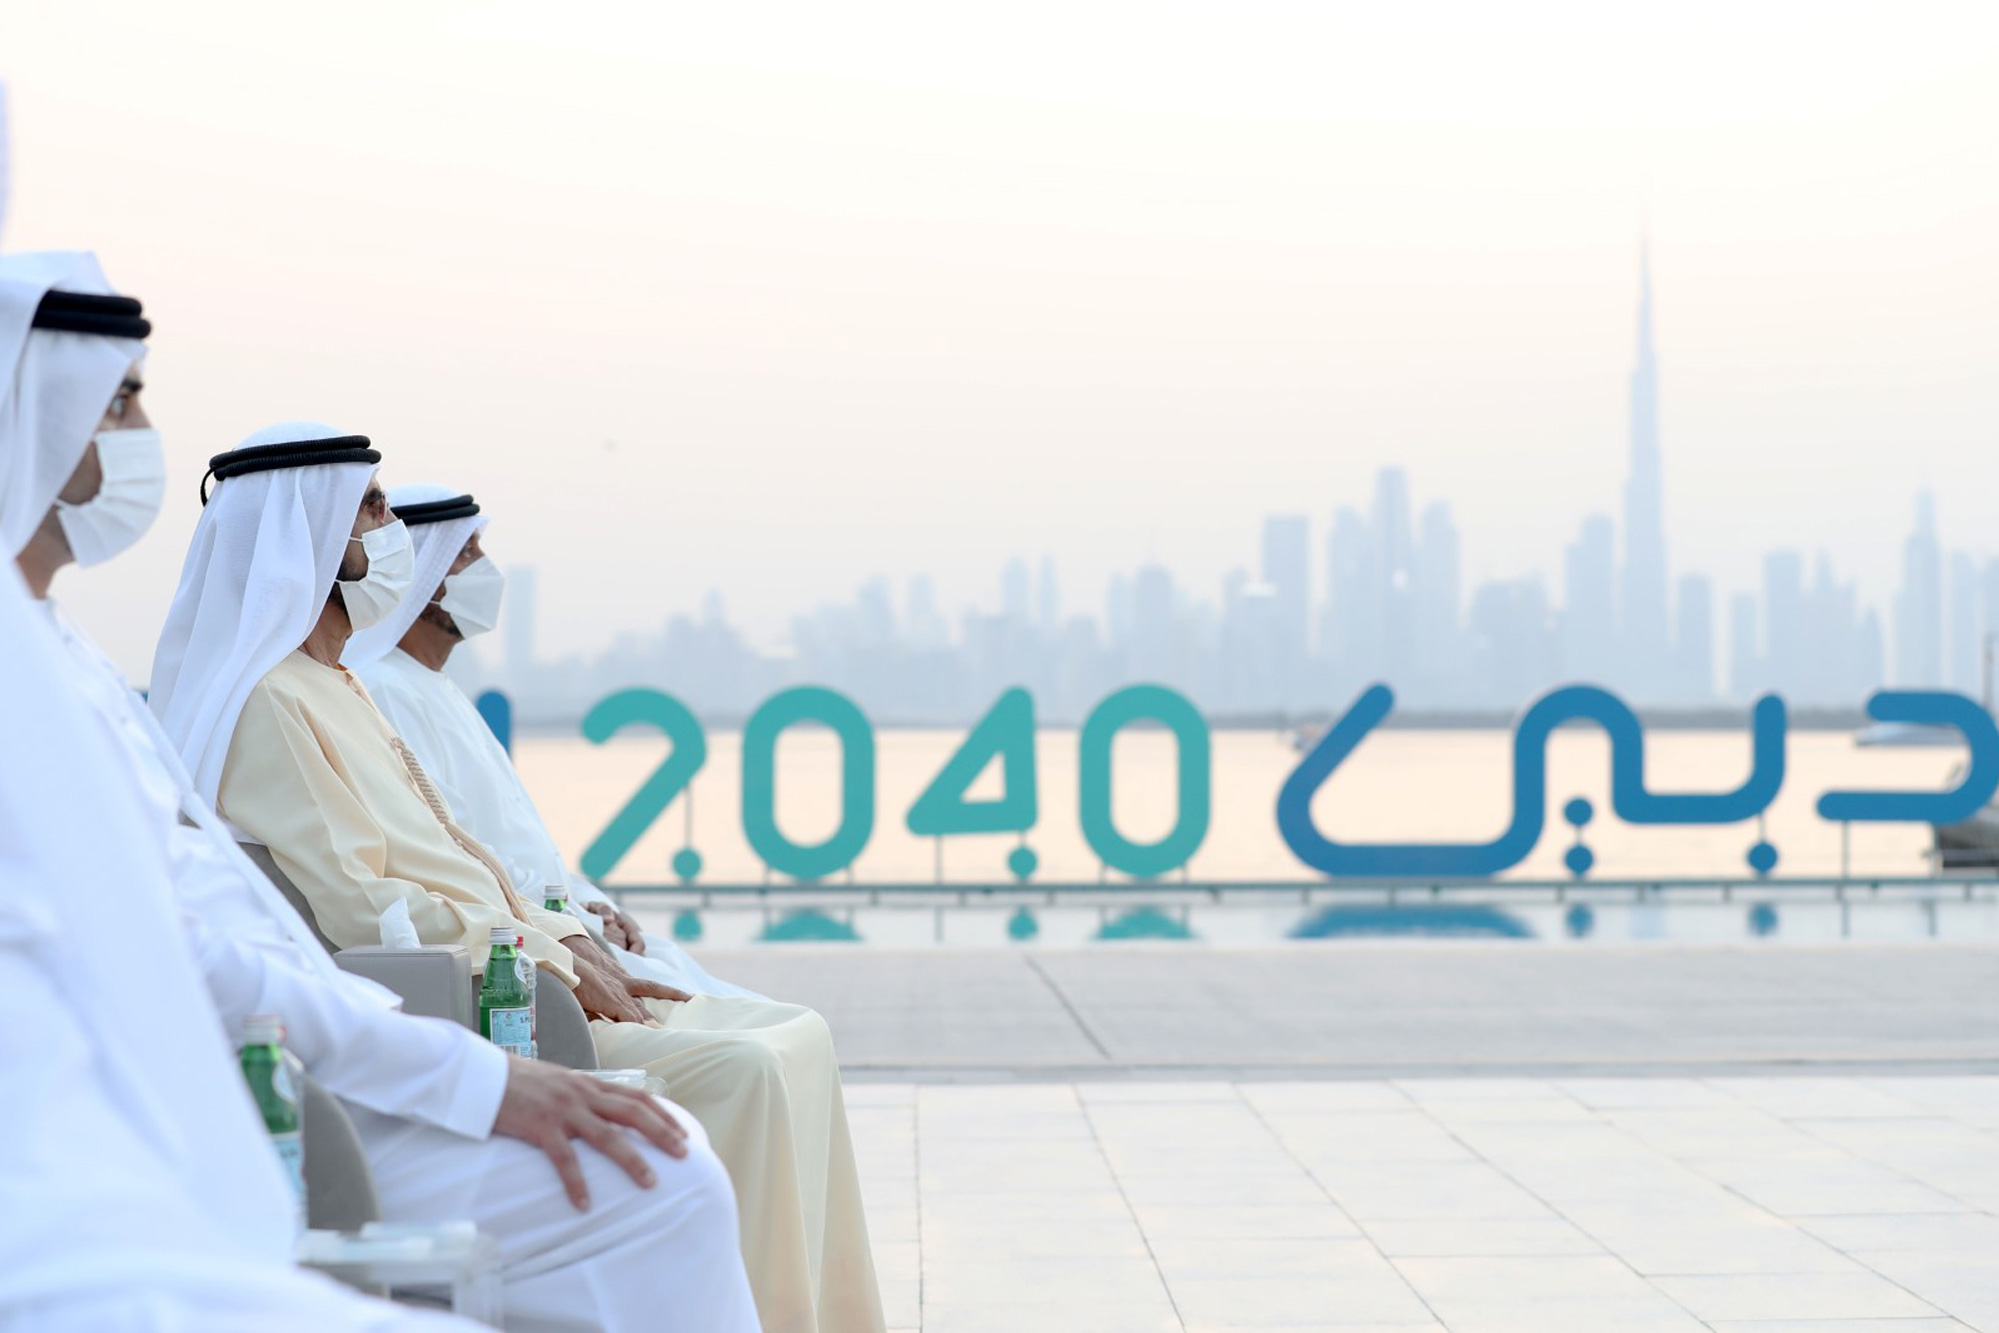 Sheikh Mohammed’s “Vision 2040”